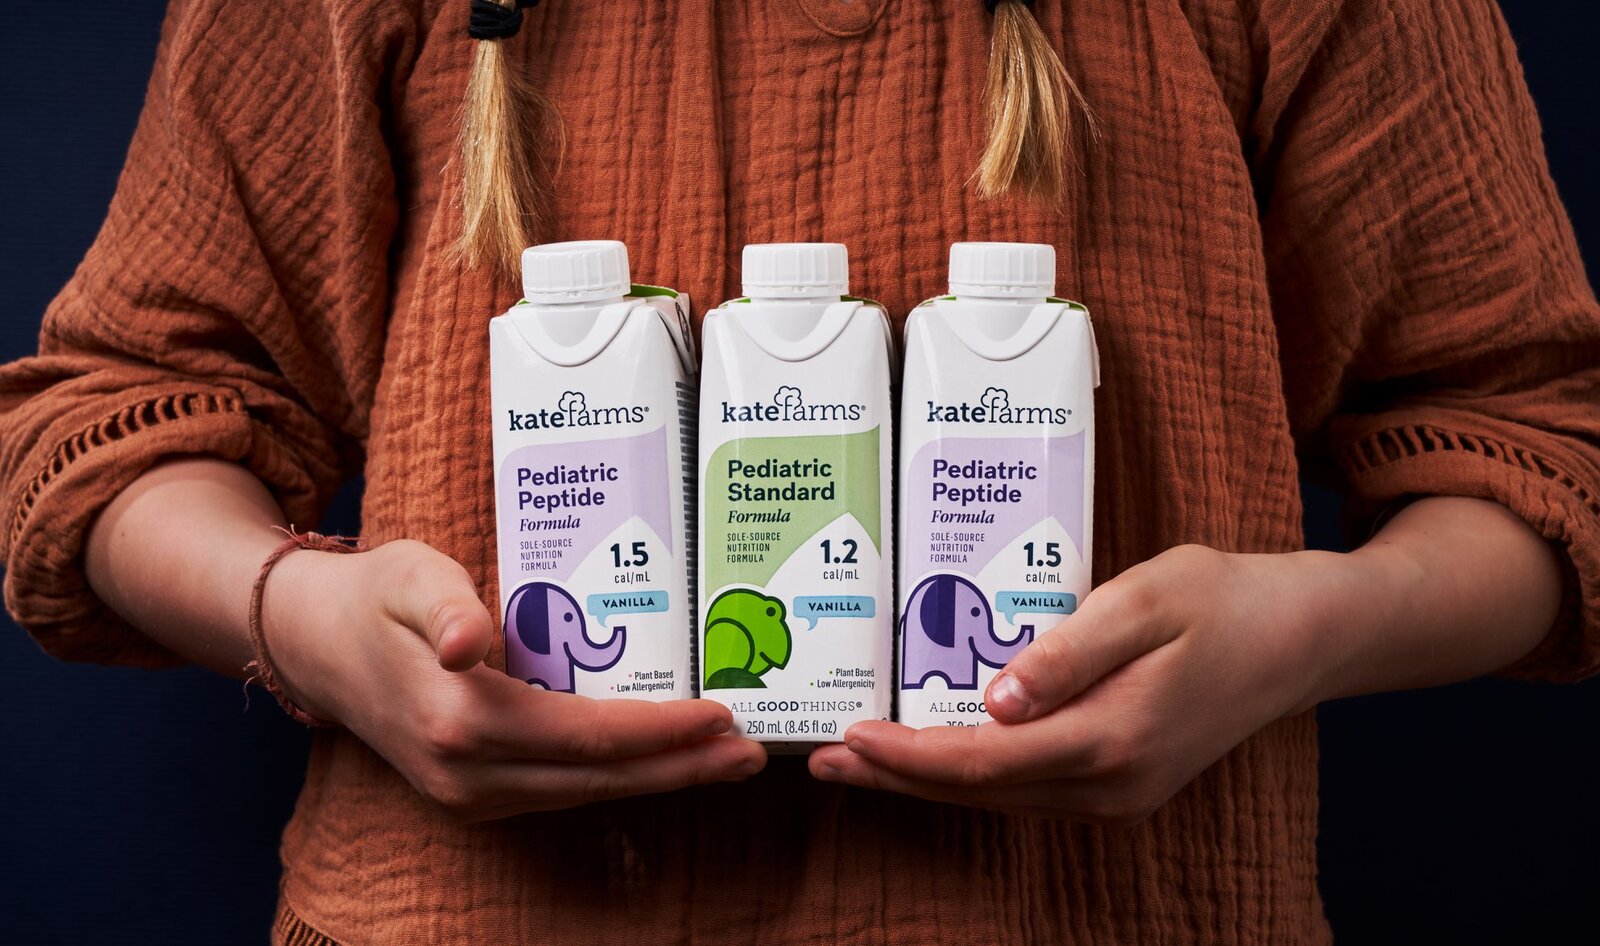 Vegan Nutrition Brand Kate Farms Raises $23 Million to Bring Innovative Formula to Market